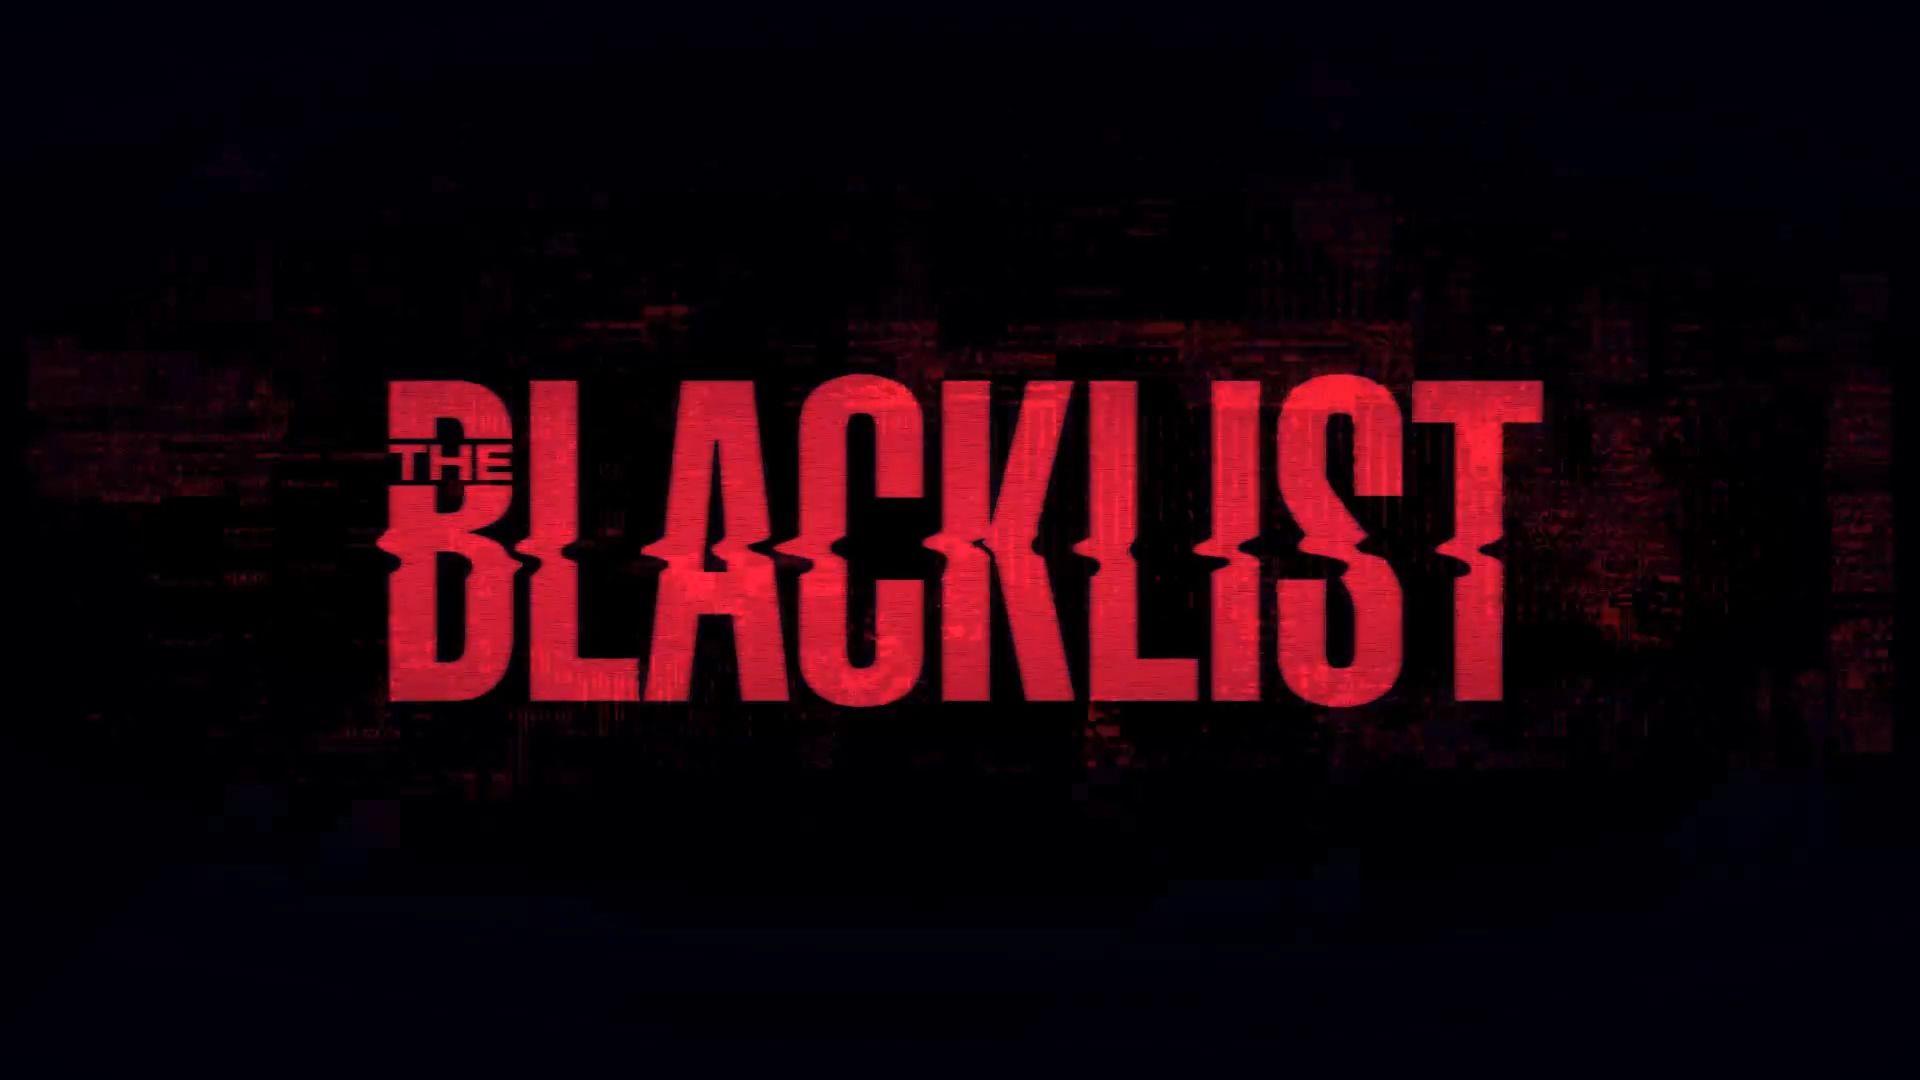 1920x1080 The Blacklist Wallpaper Độ phân giải cao # KJD4Y4B